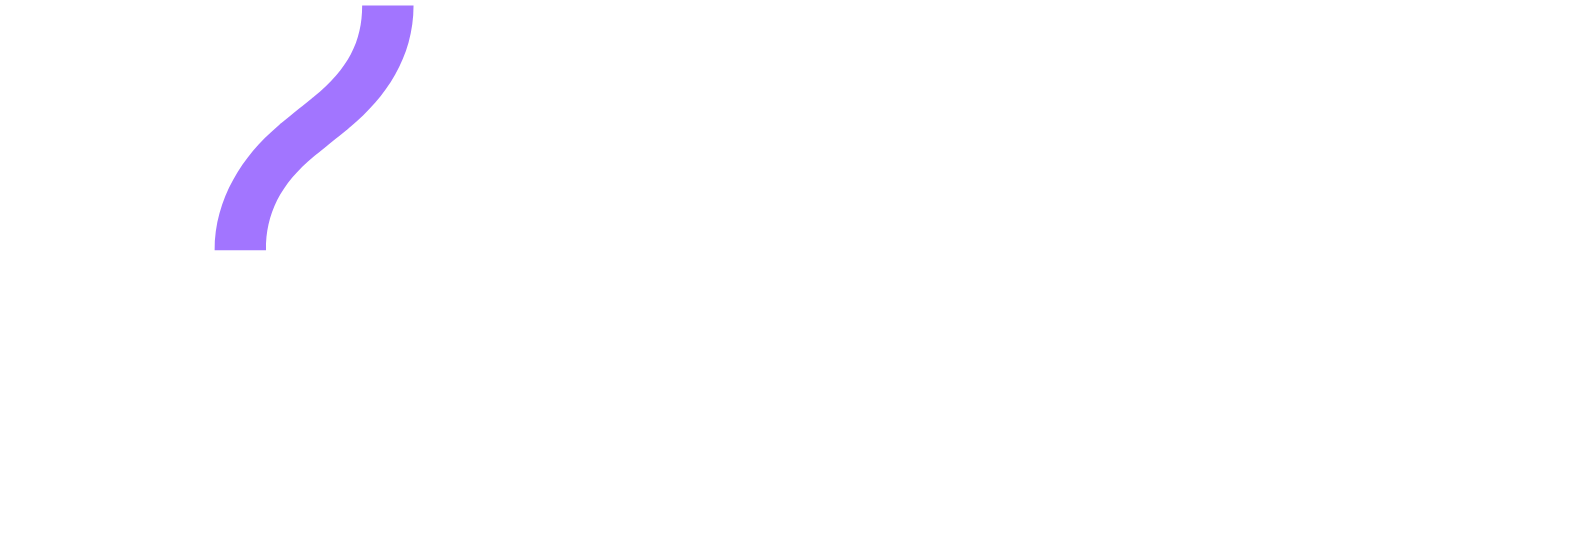 Exact Sciences logo large for dark backgrounds (transparent PNG)